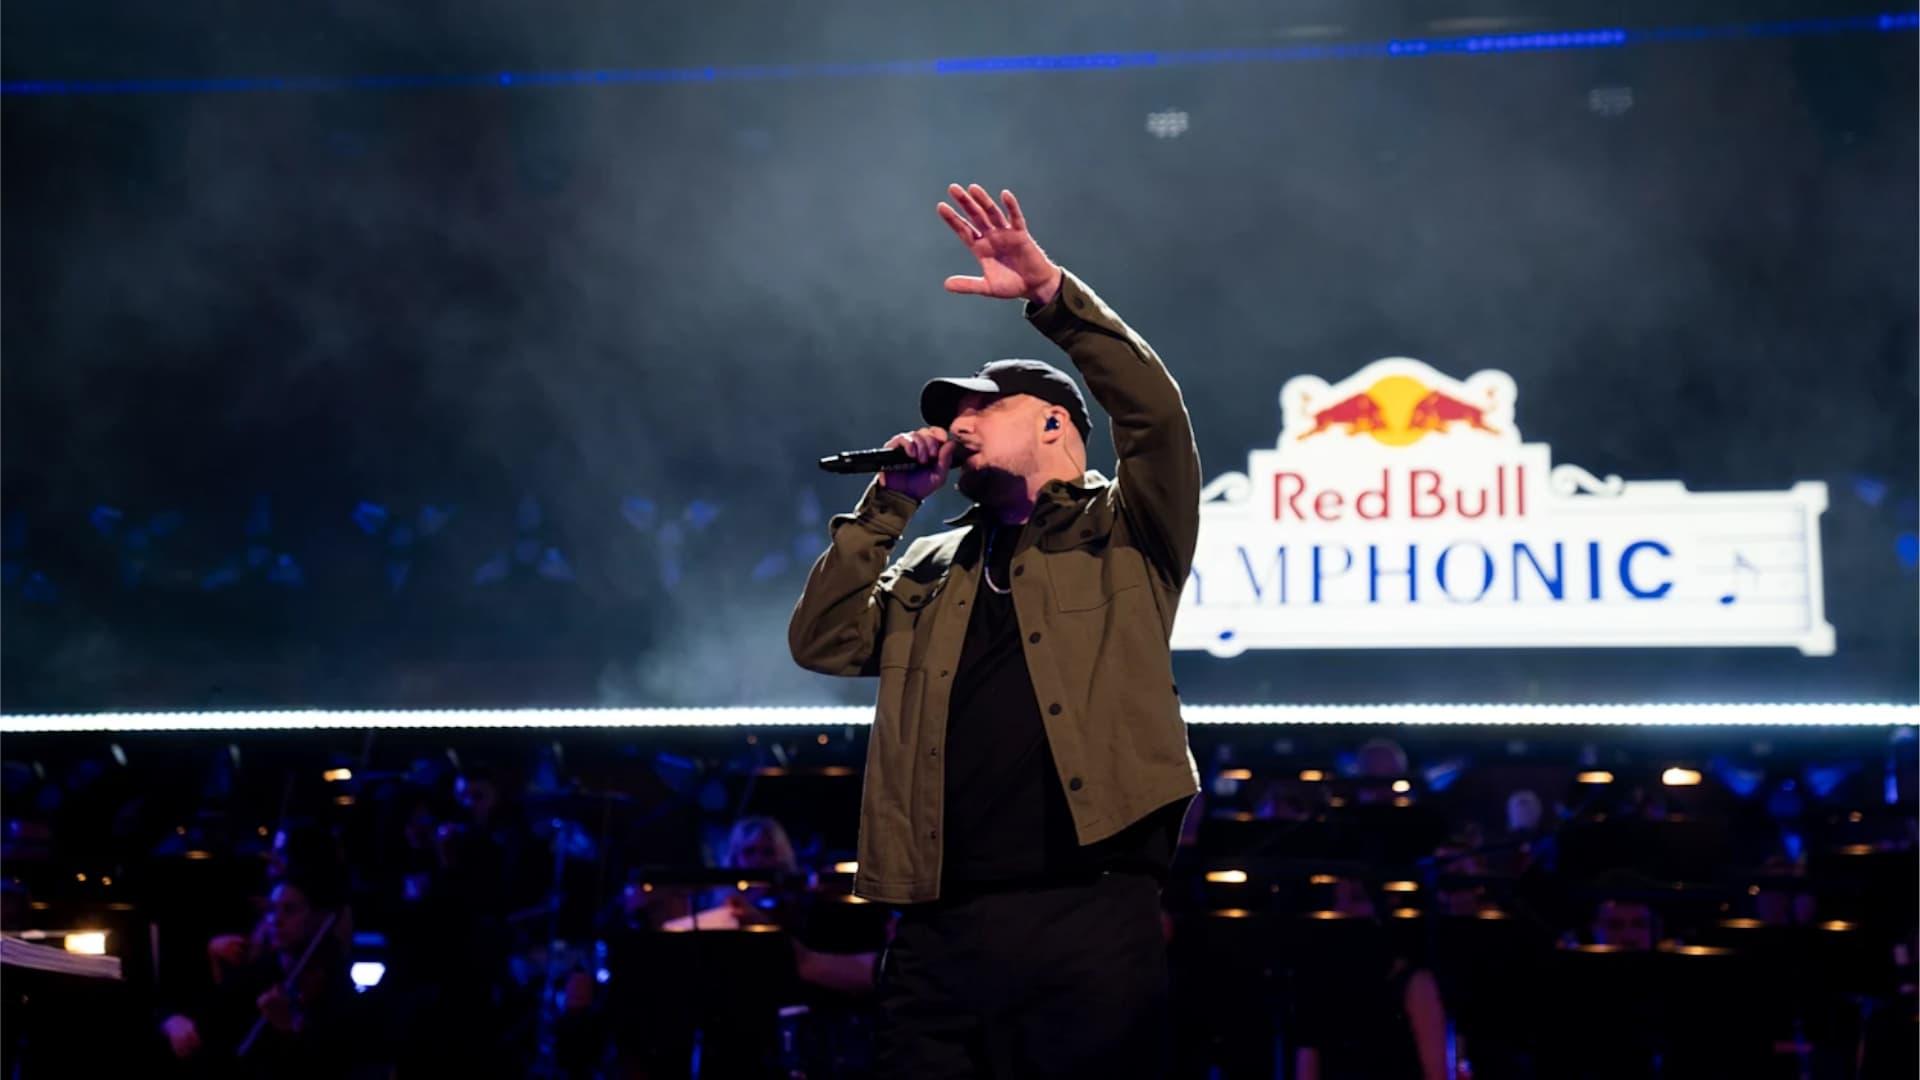 Red Bull Symphonic: Kool Savas backdrop